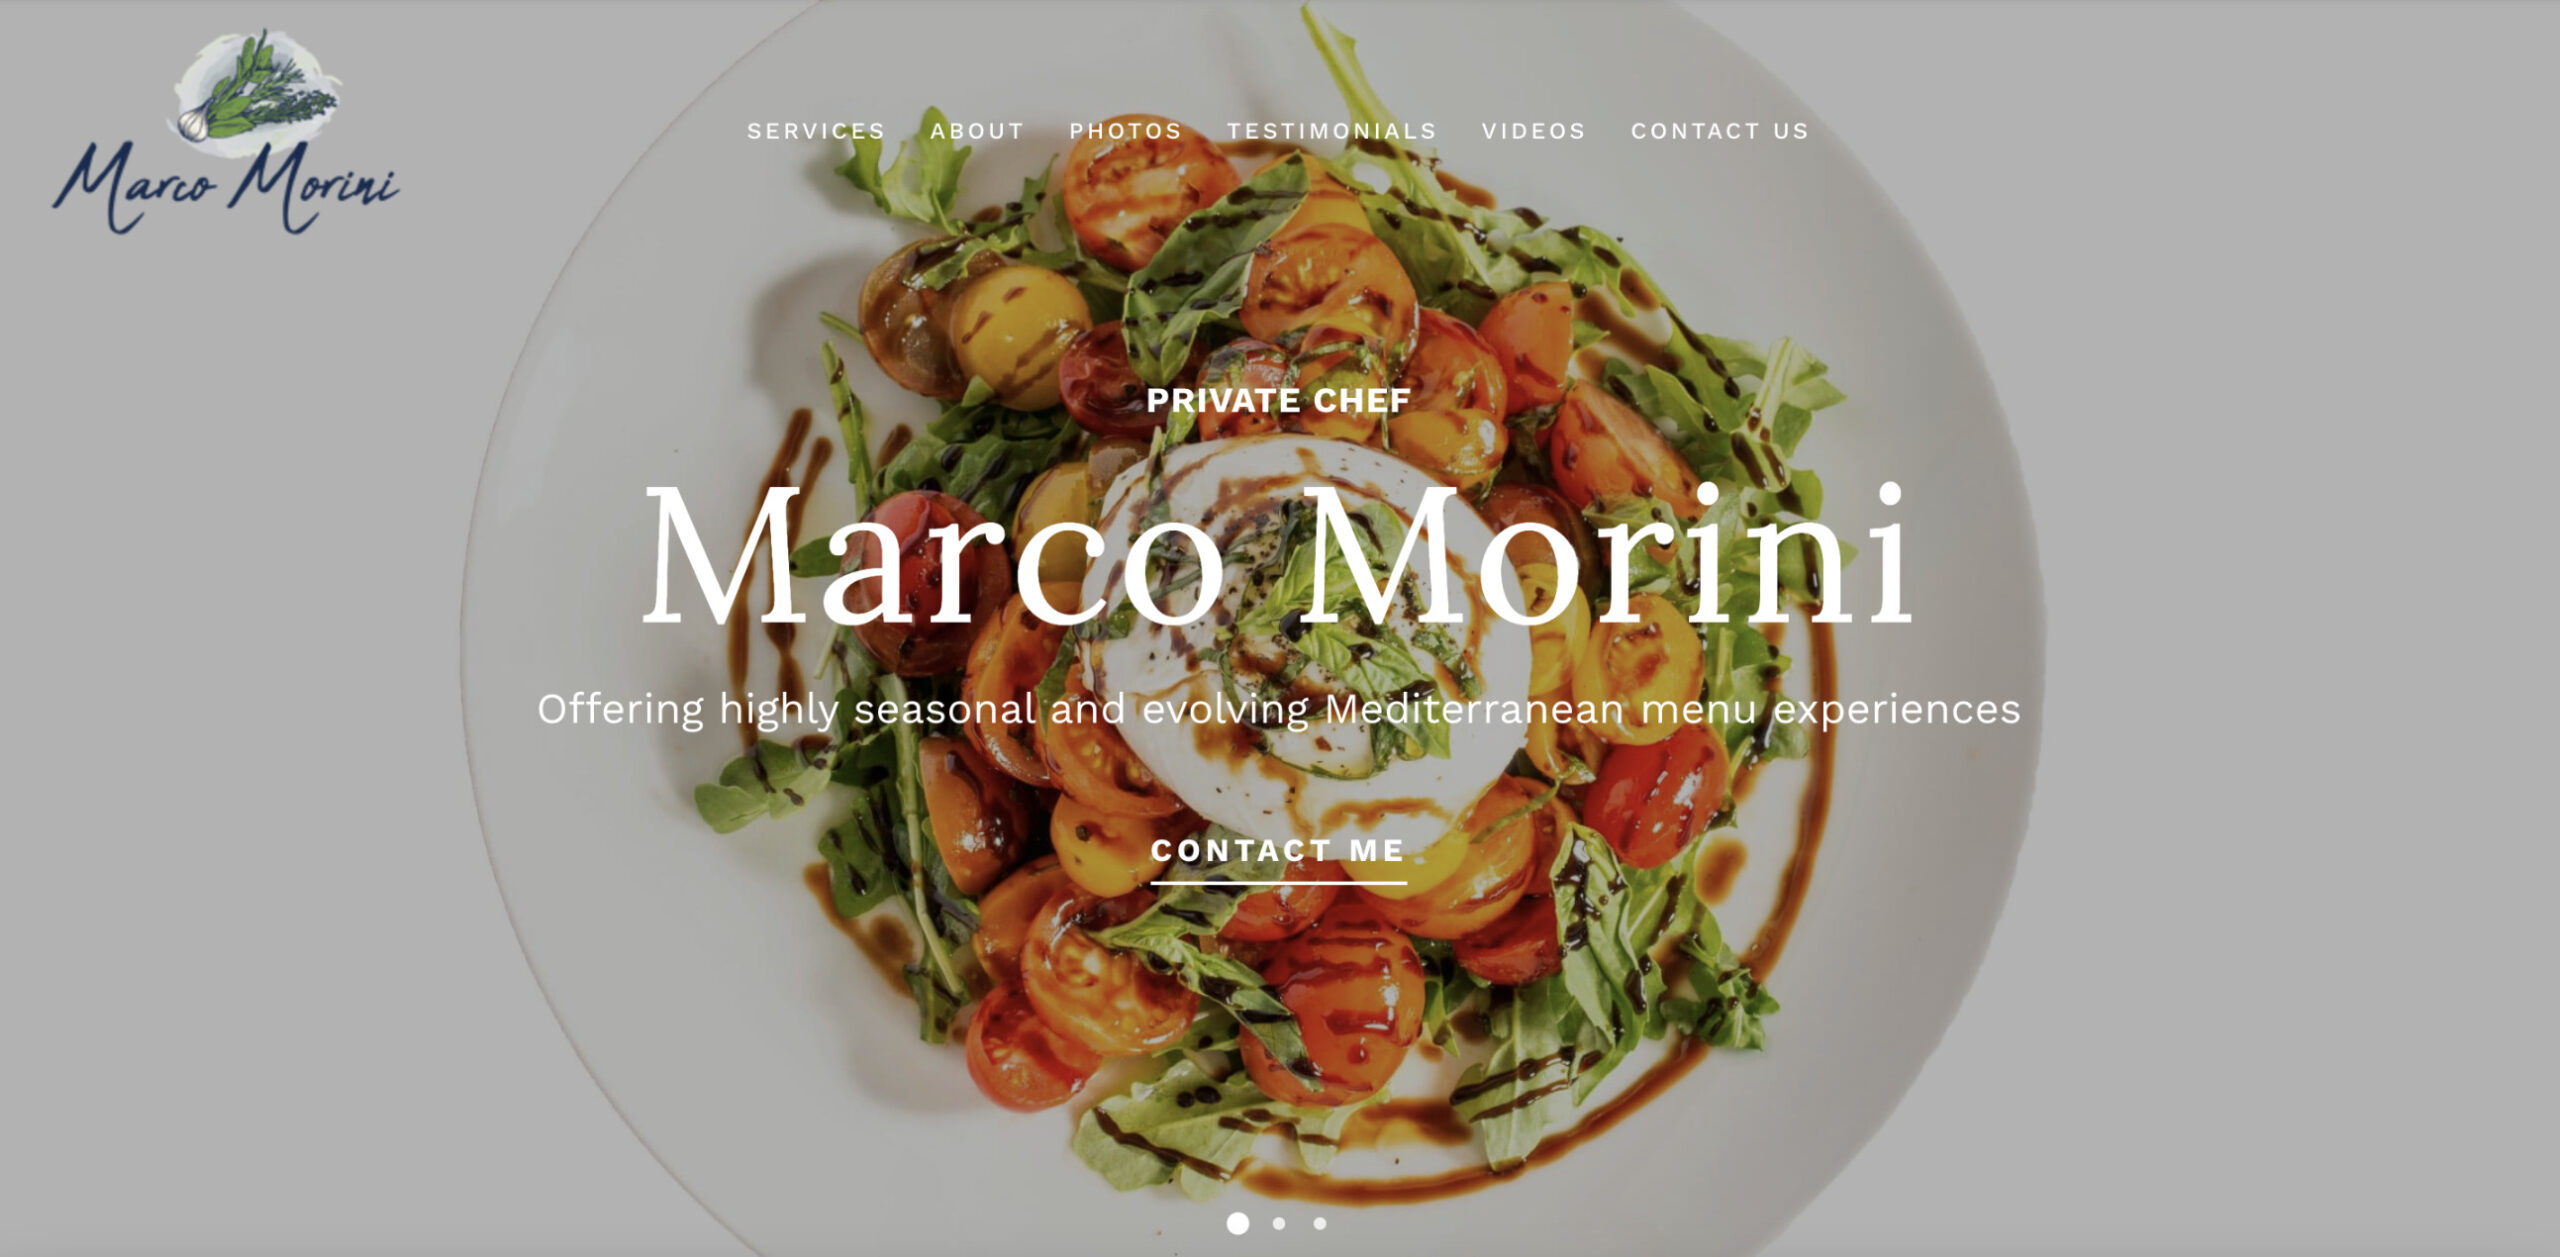 Chef Marco Morini - Skyway Web Design client